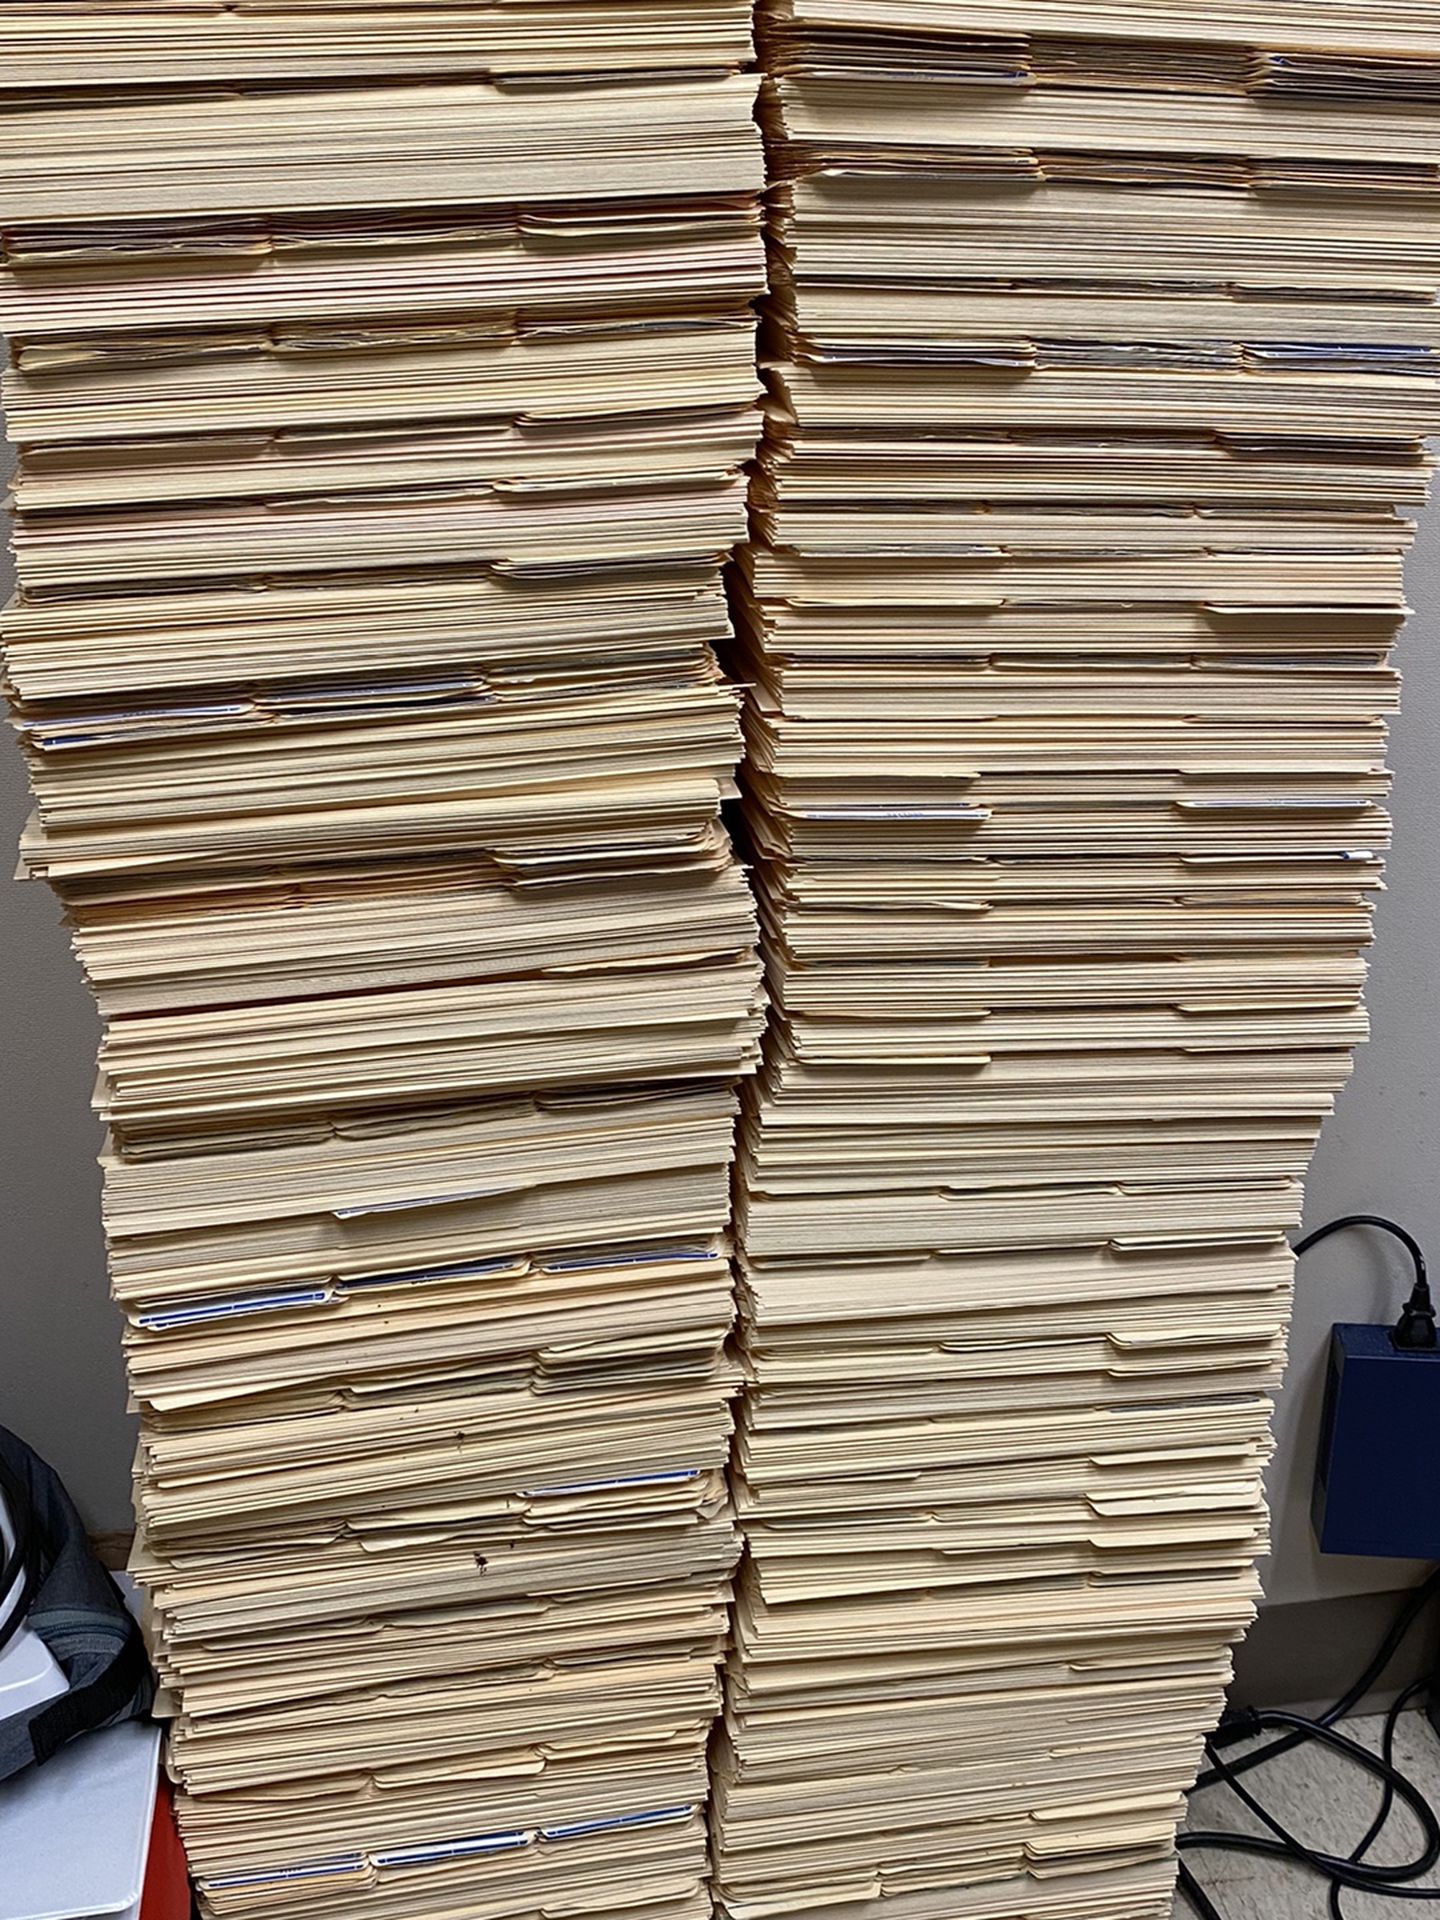 FREE Manilla Folders - Must Pickup in Dallas 75203